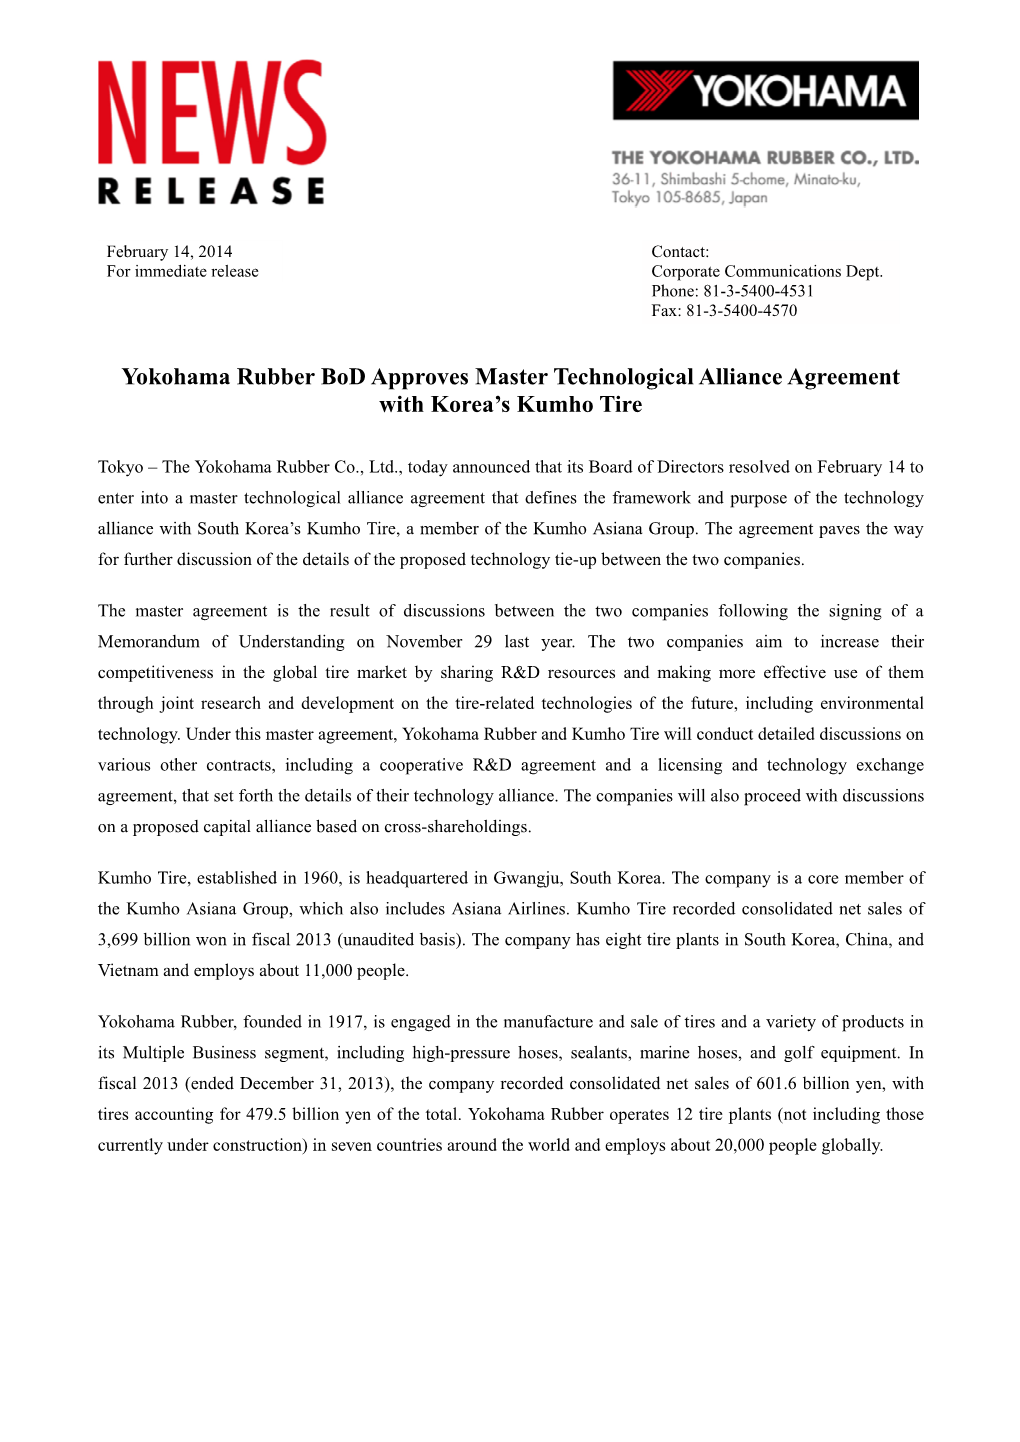 Yokohama Rubber Bod Approves Master Technological Alliance Agreement with Korea’S Kumho Tire